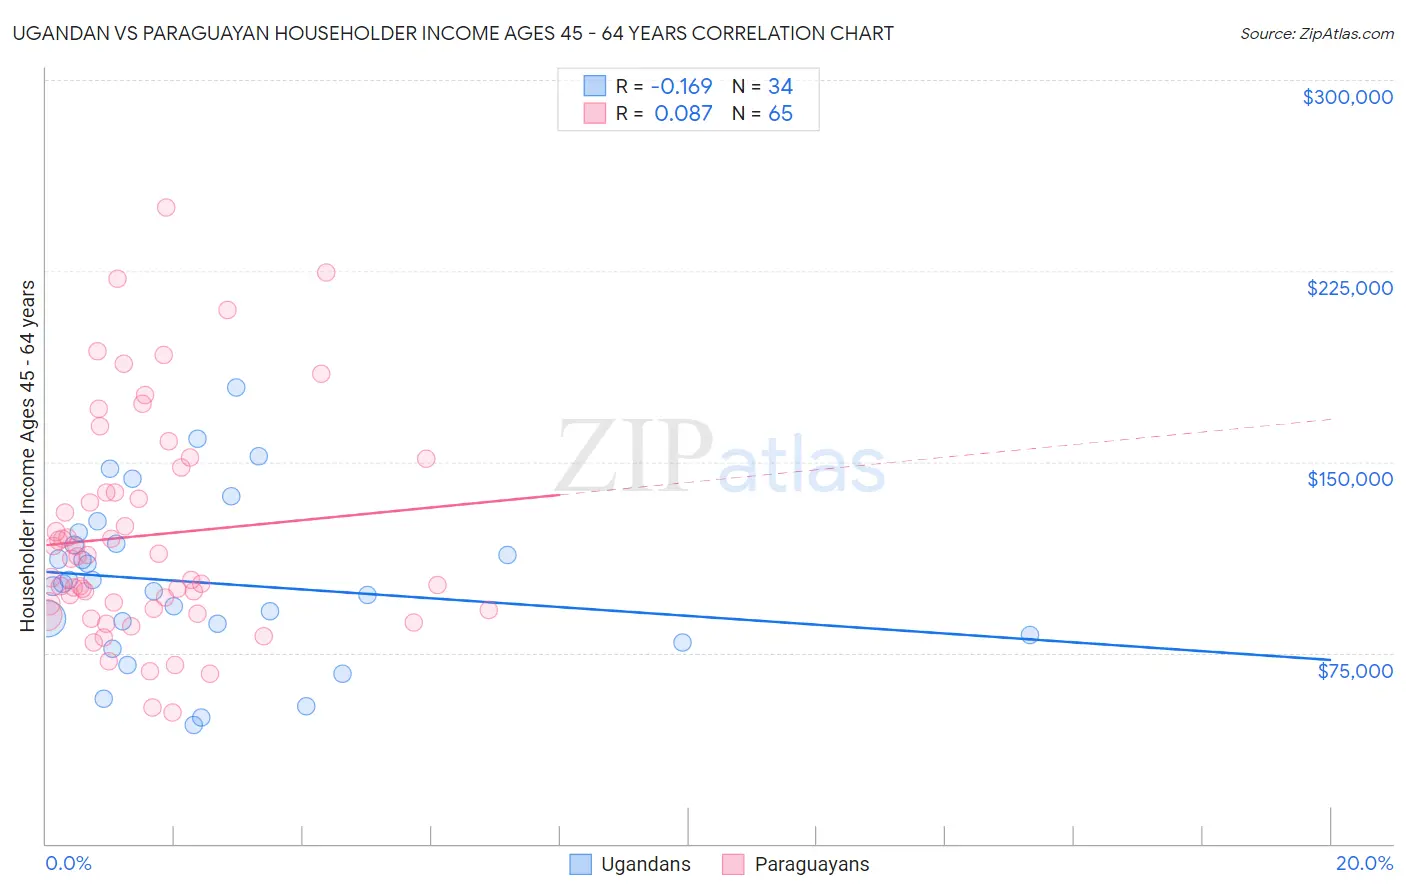 Ugandan vs Paraguayan Householder Income Ages 45 - 64 years